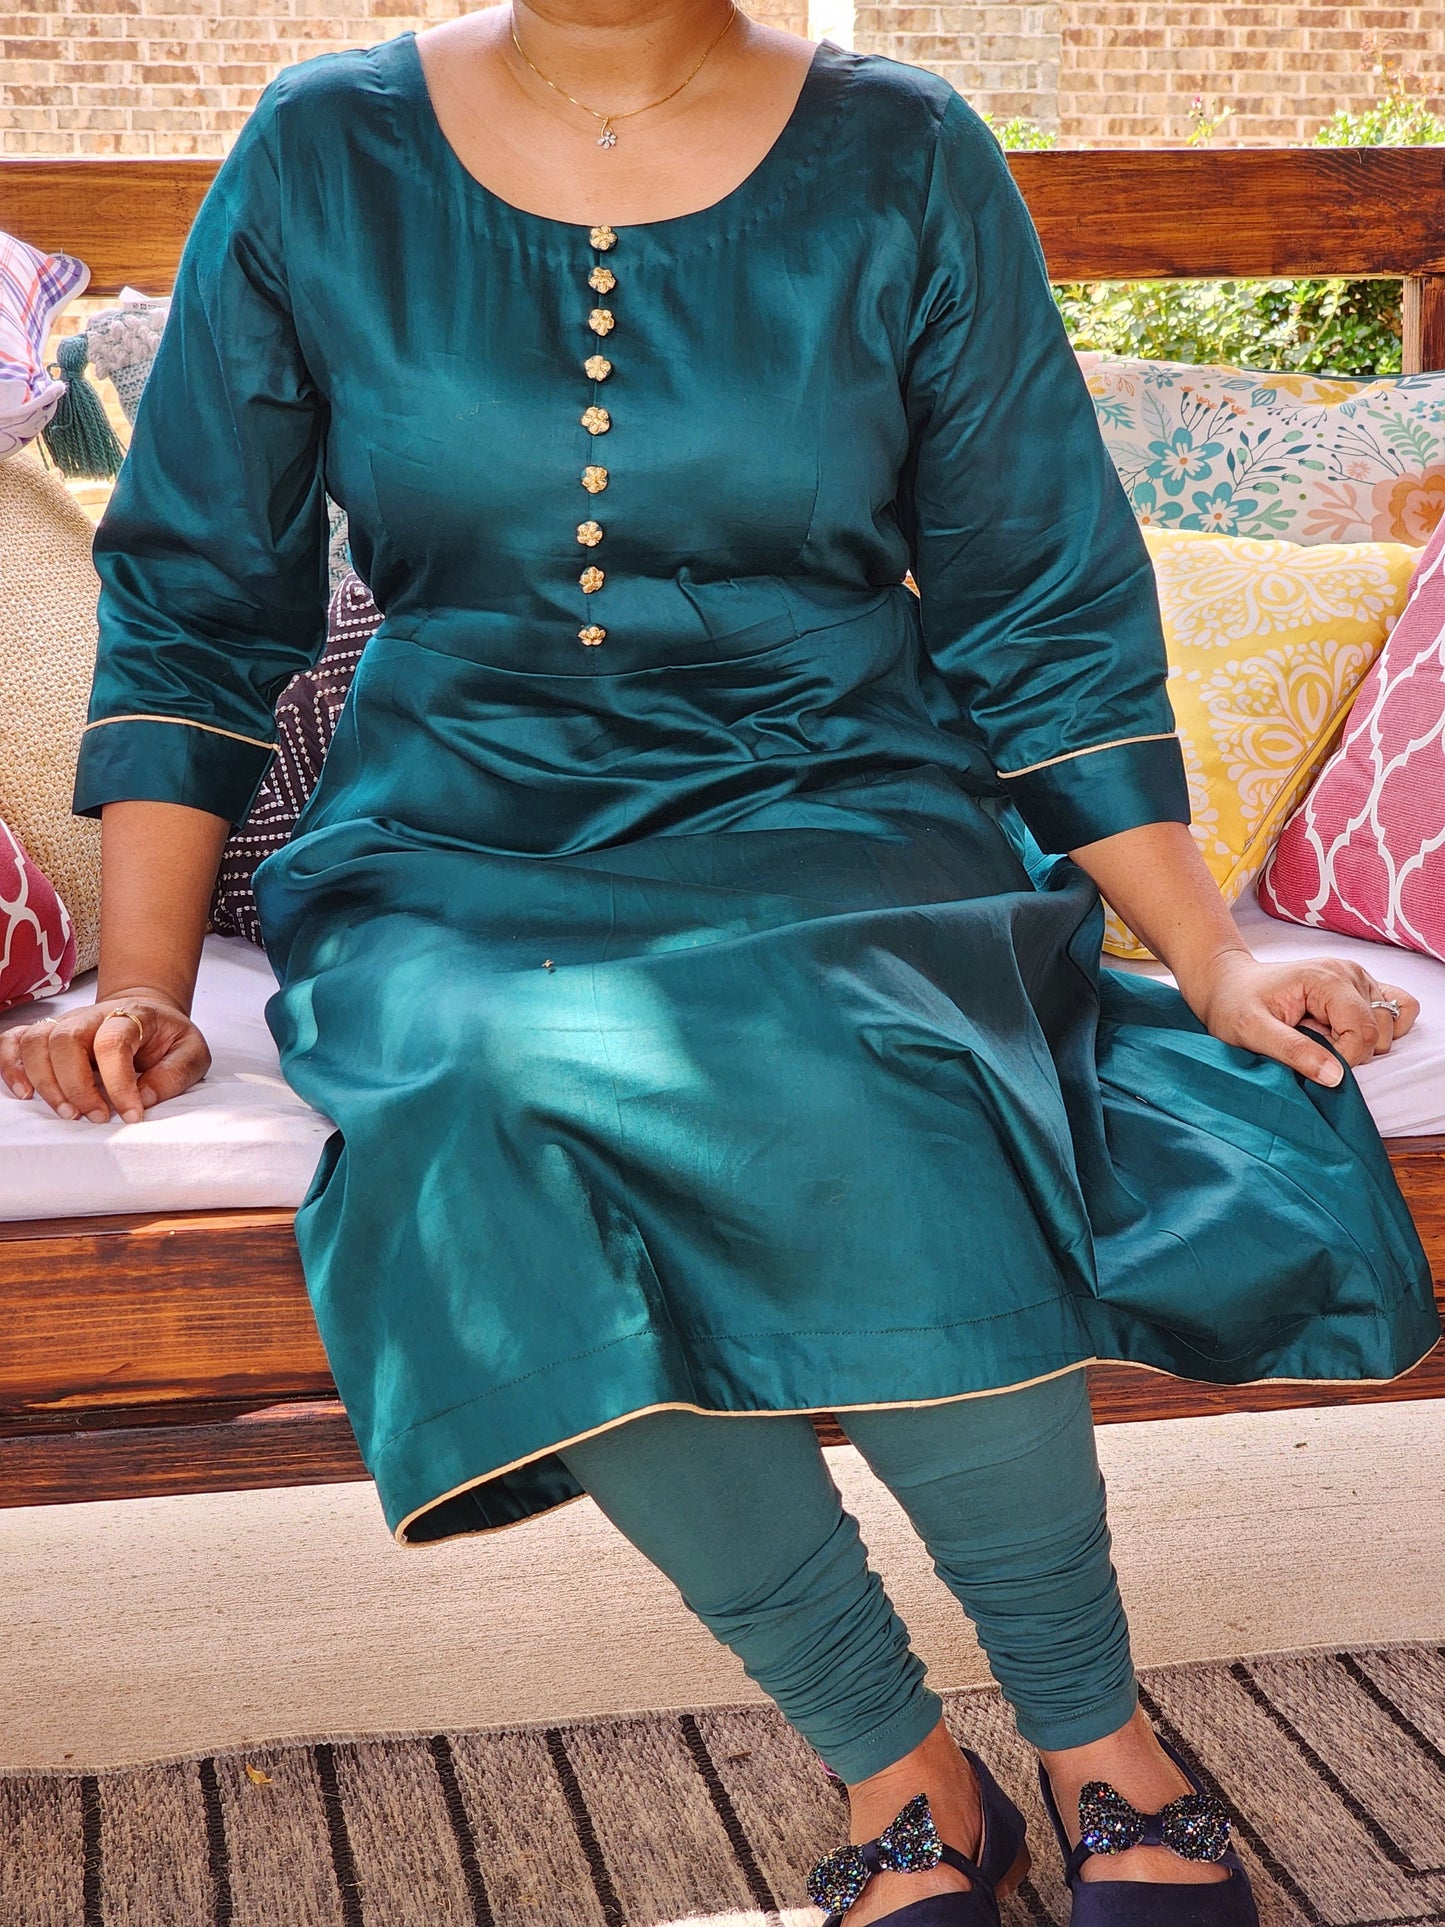 Indian A Line Style Kurta / Kurti, Bottle Green Color Elegant Long Suit Dress, Leggings & Banarasi Dupatta set, Silky Smooth Designer Suit